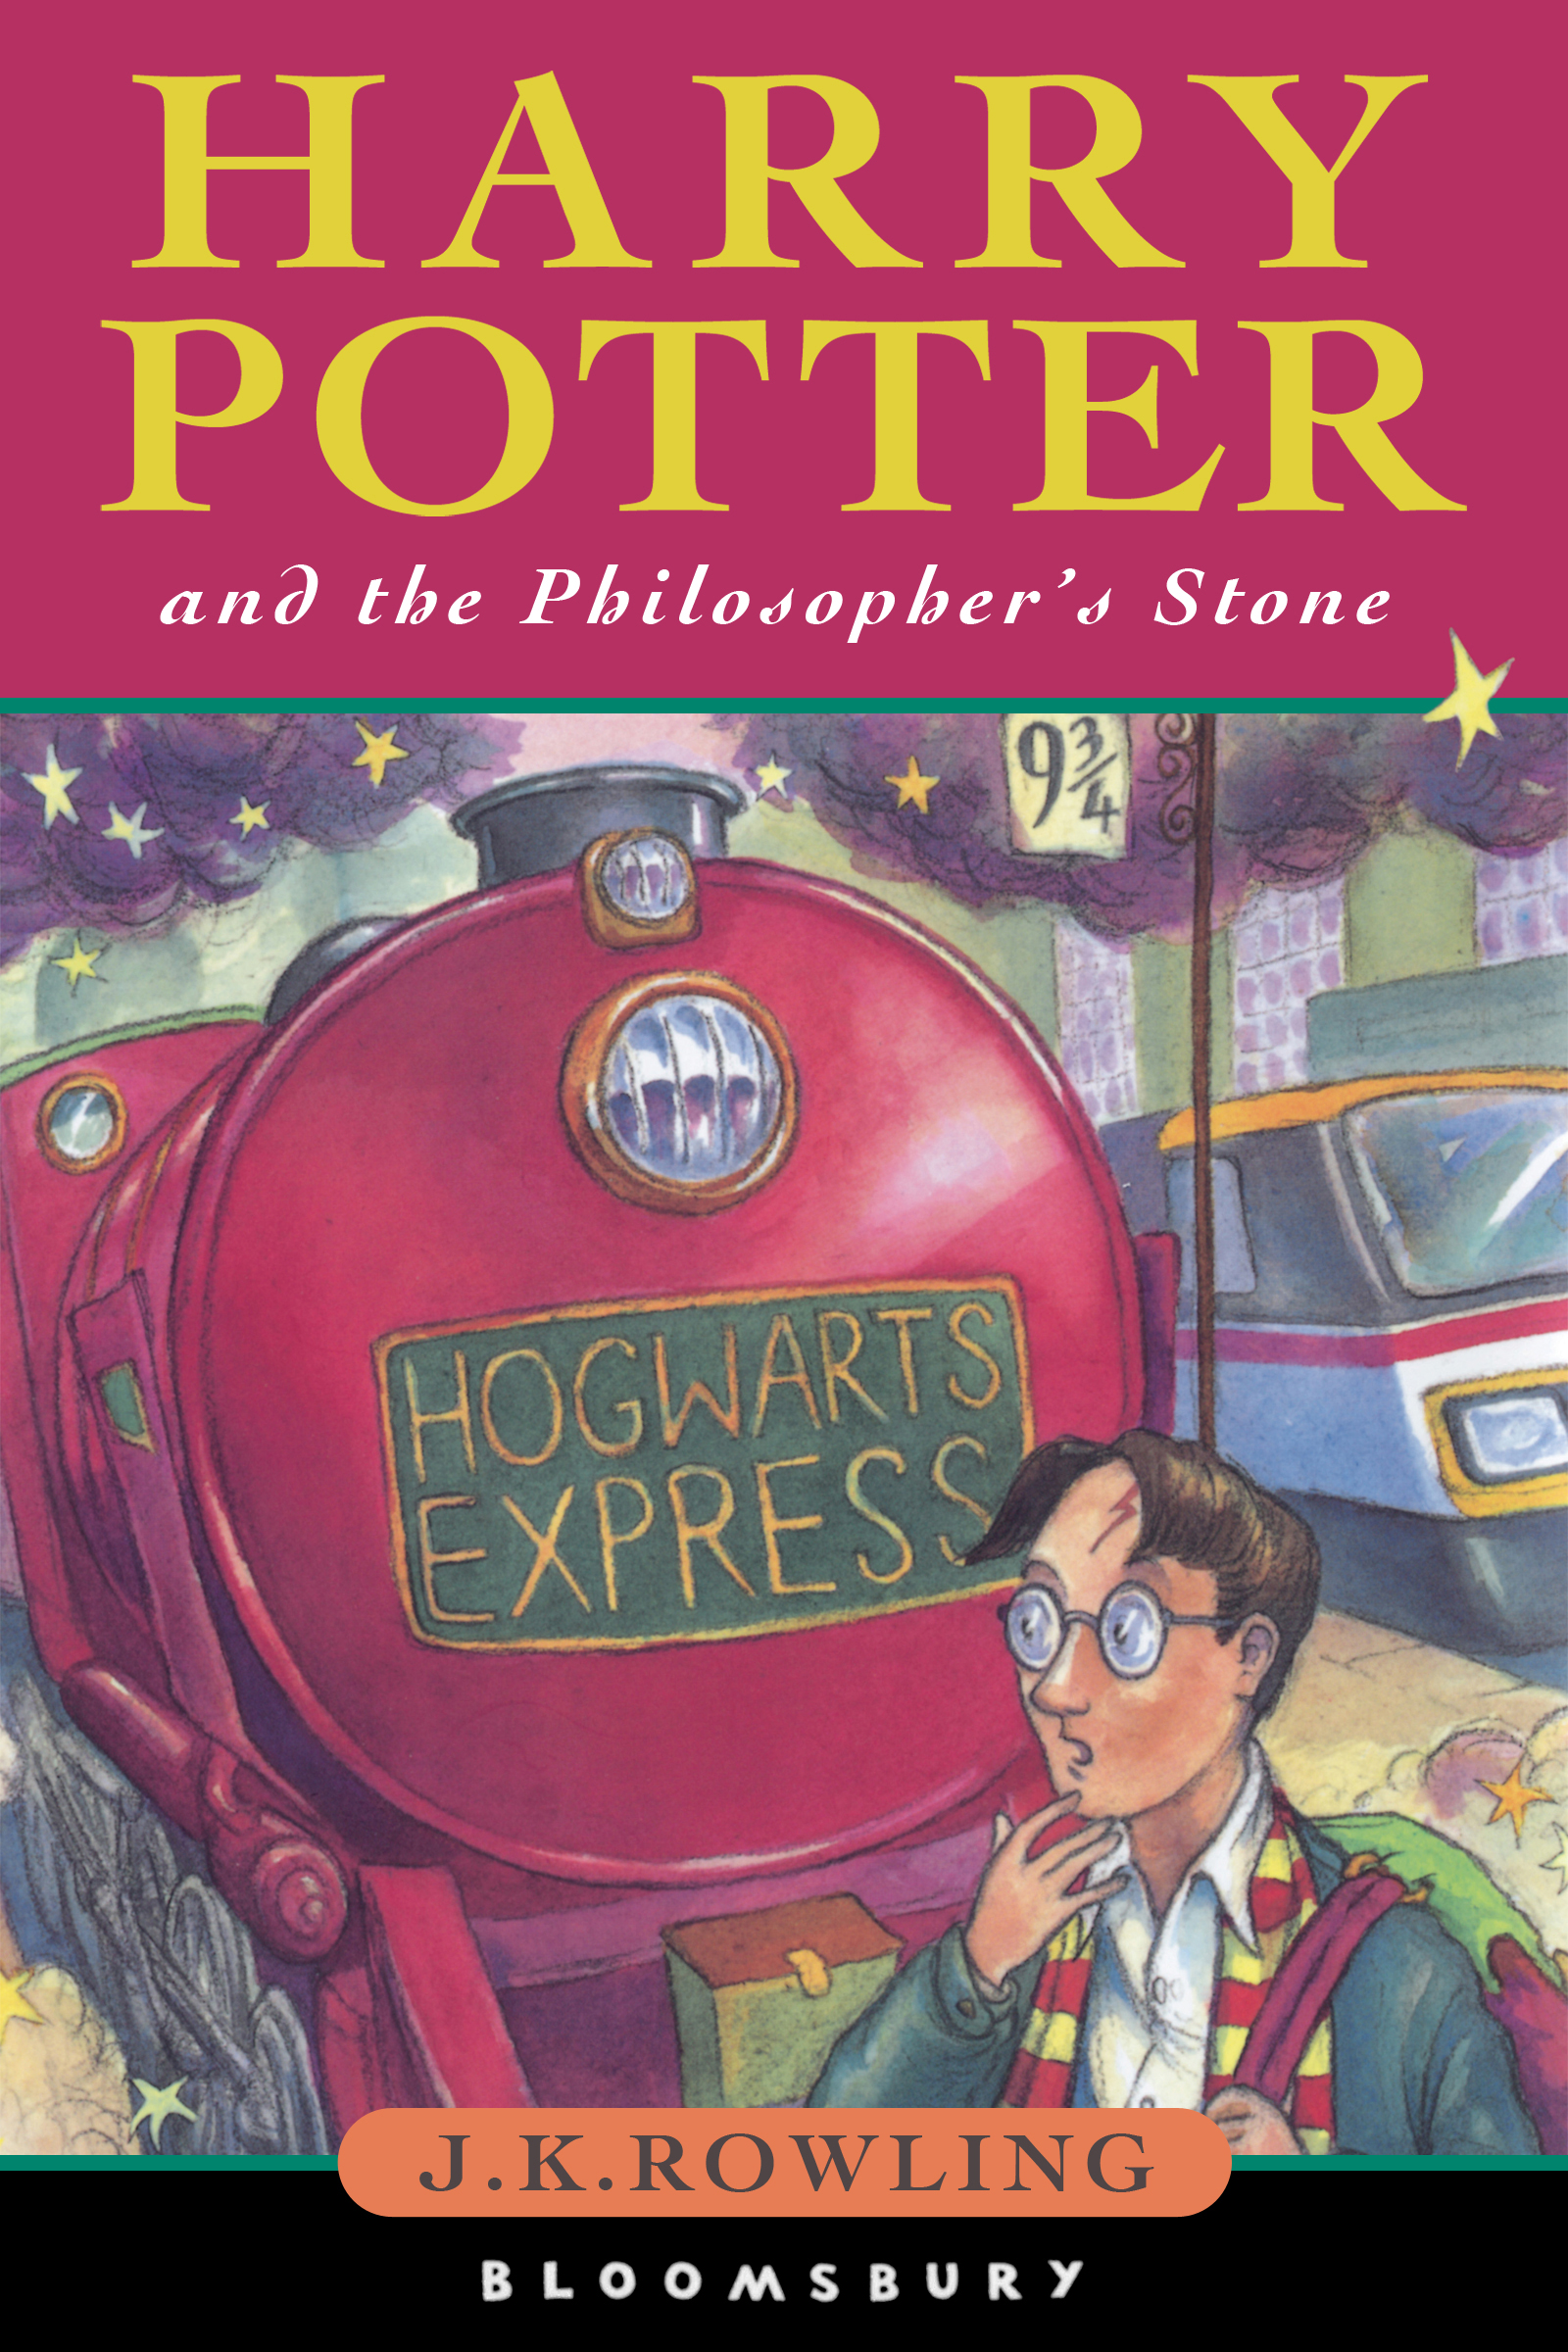 Harry Potter (The Harry Potter series, J.K. Rowling)